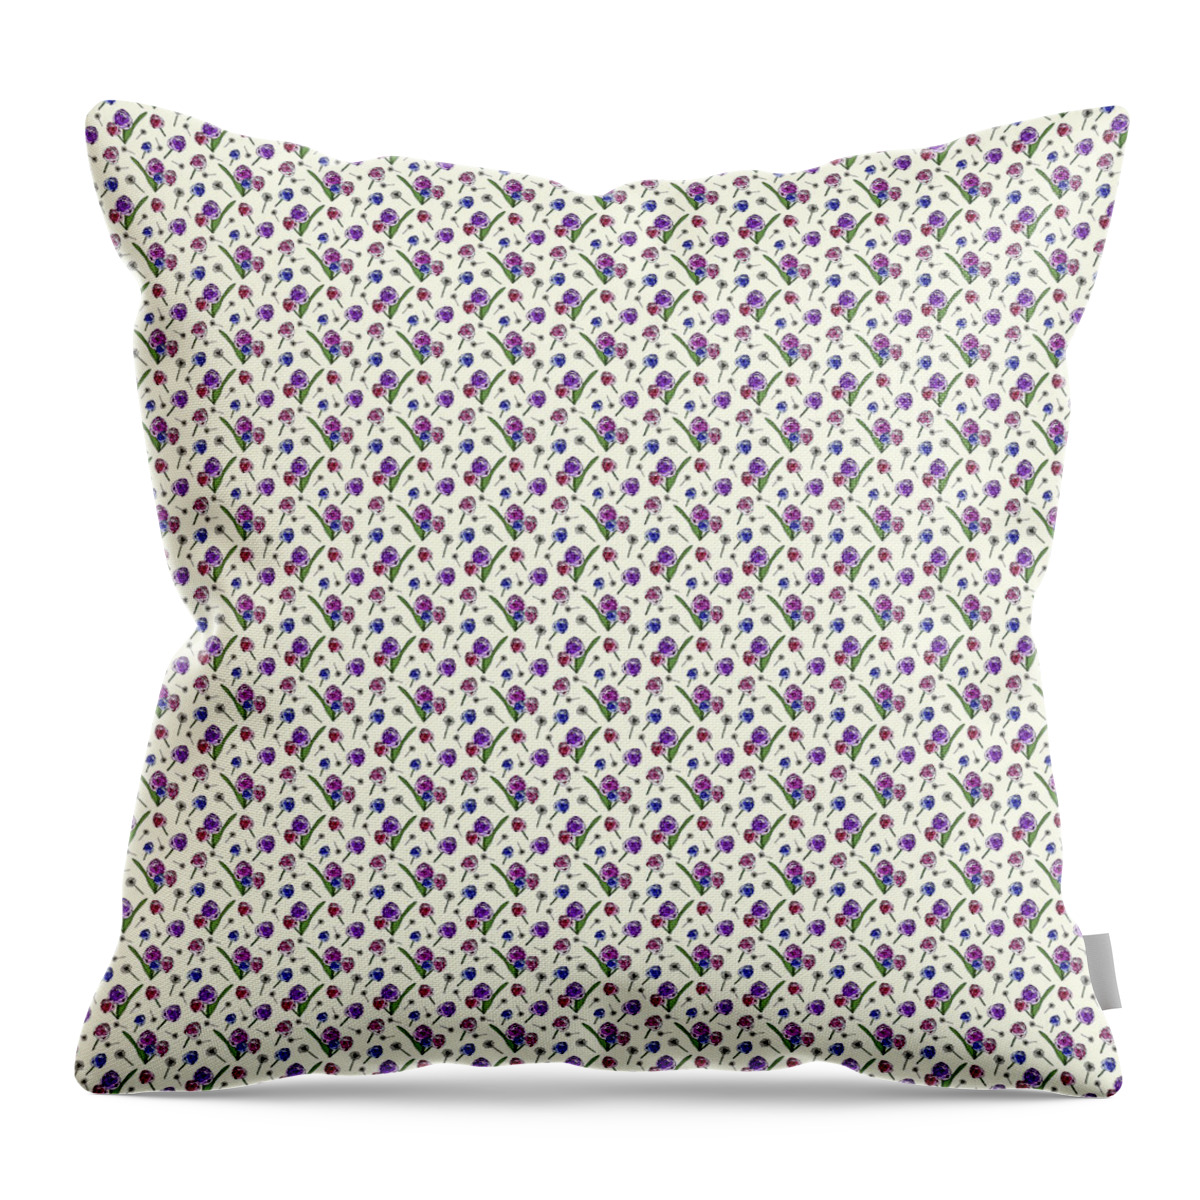  Throw Pillow featuring the digital art Garden Flowers Pattern - Medium Scale by Lisa Blake